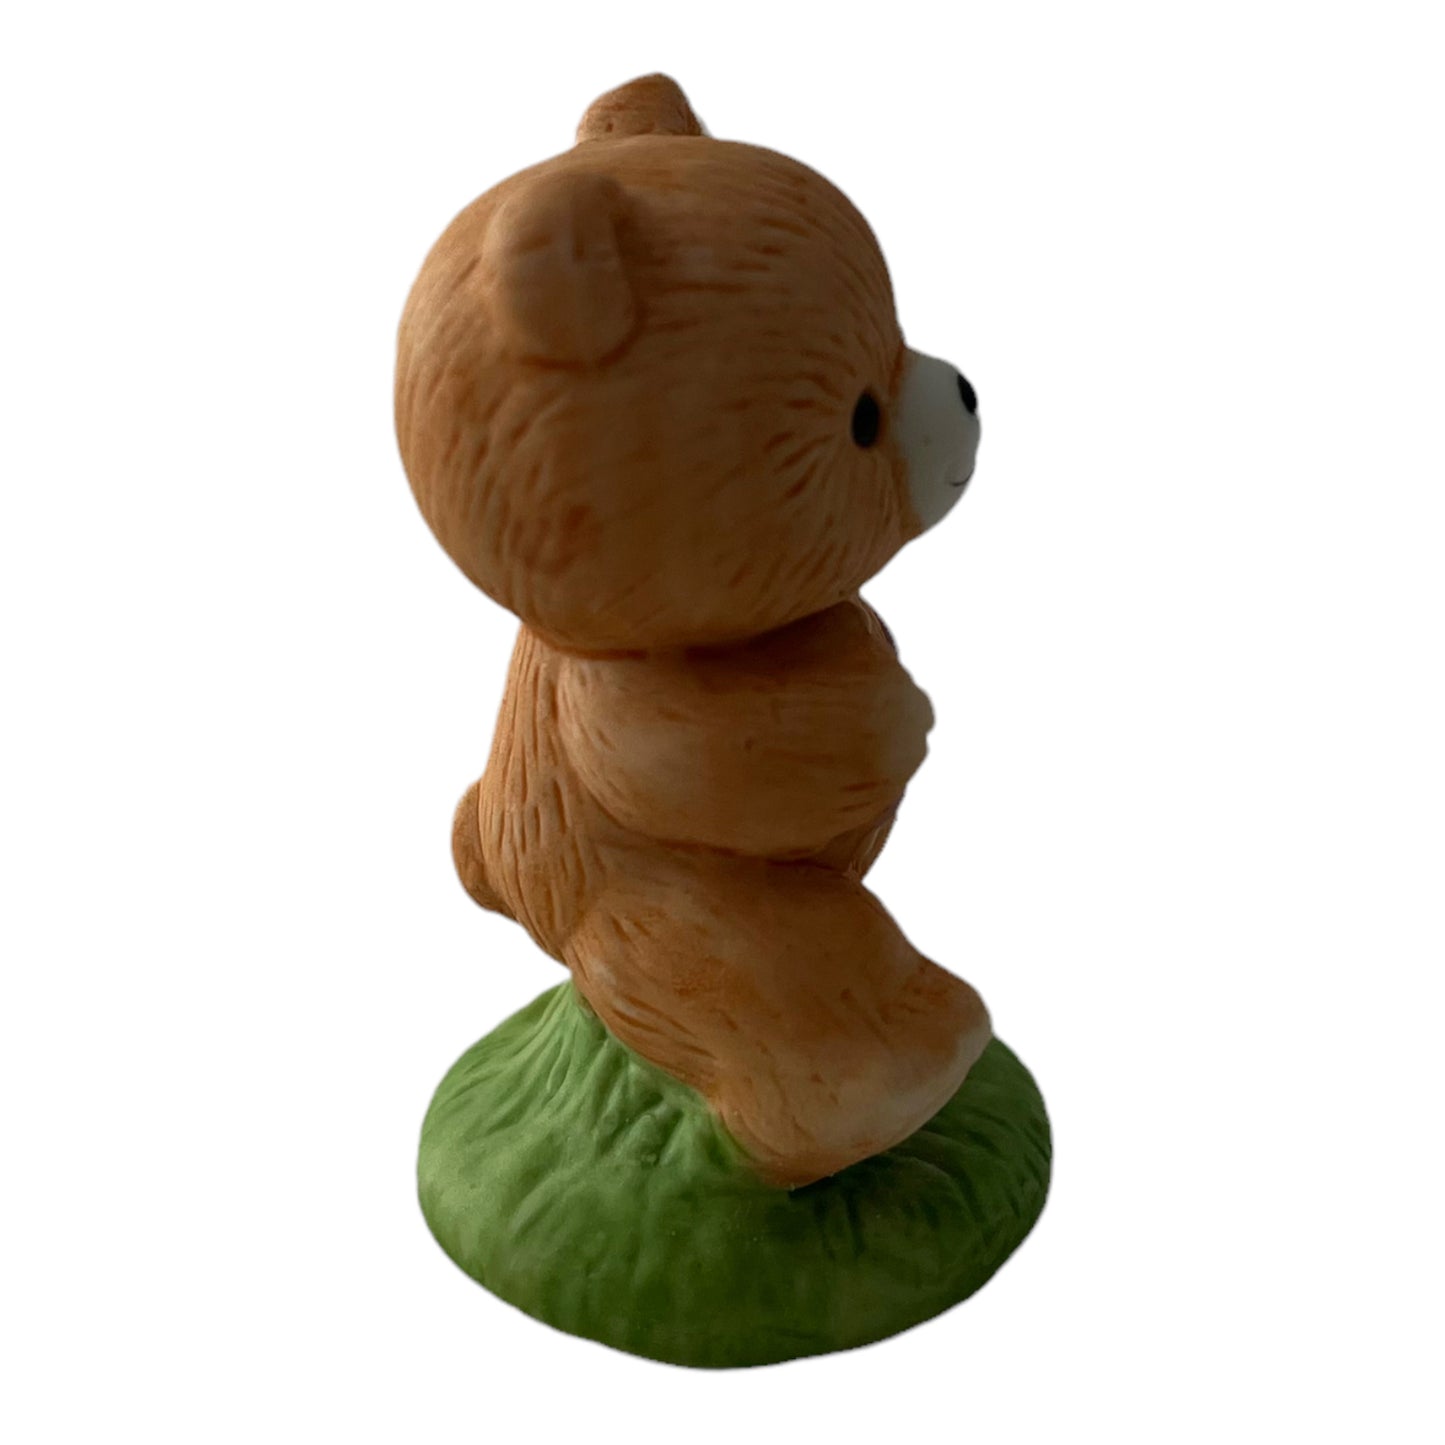 Bear with Kite Vintage Ceramic 2 Inch Figurine